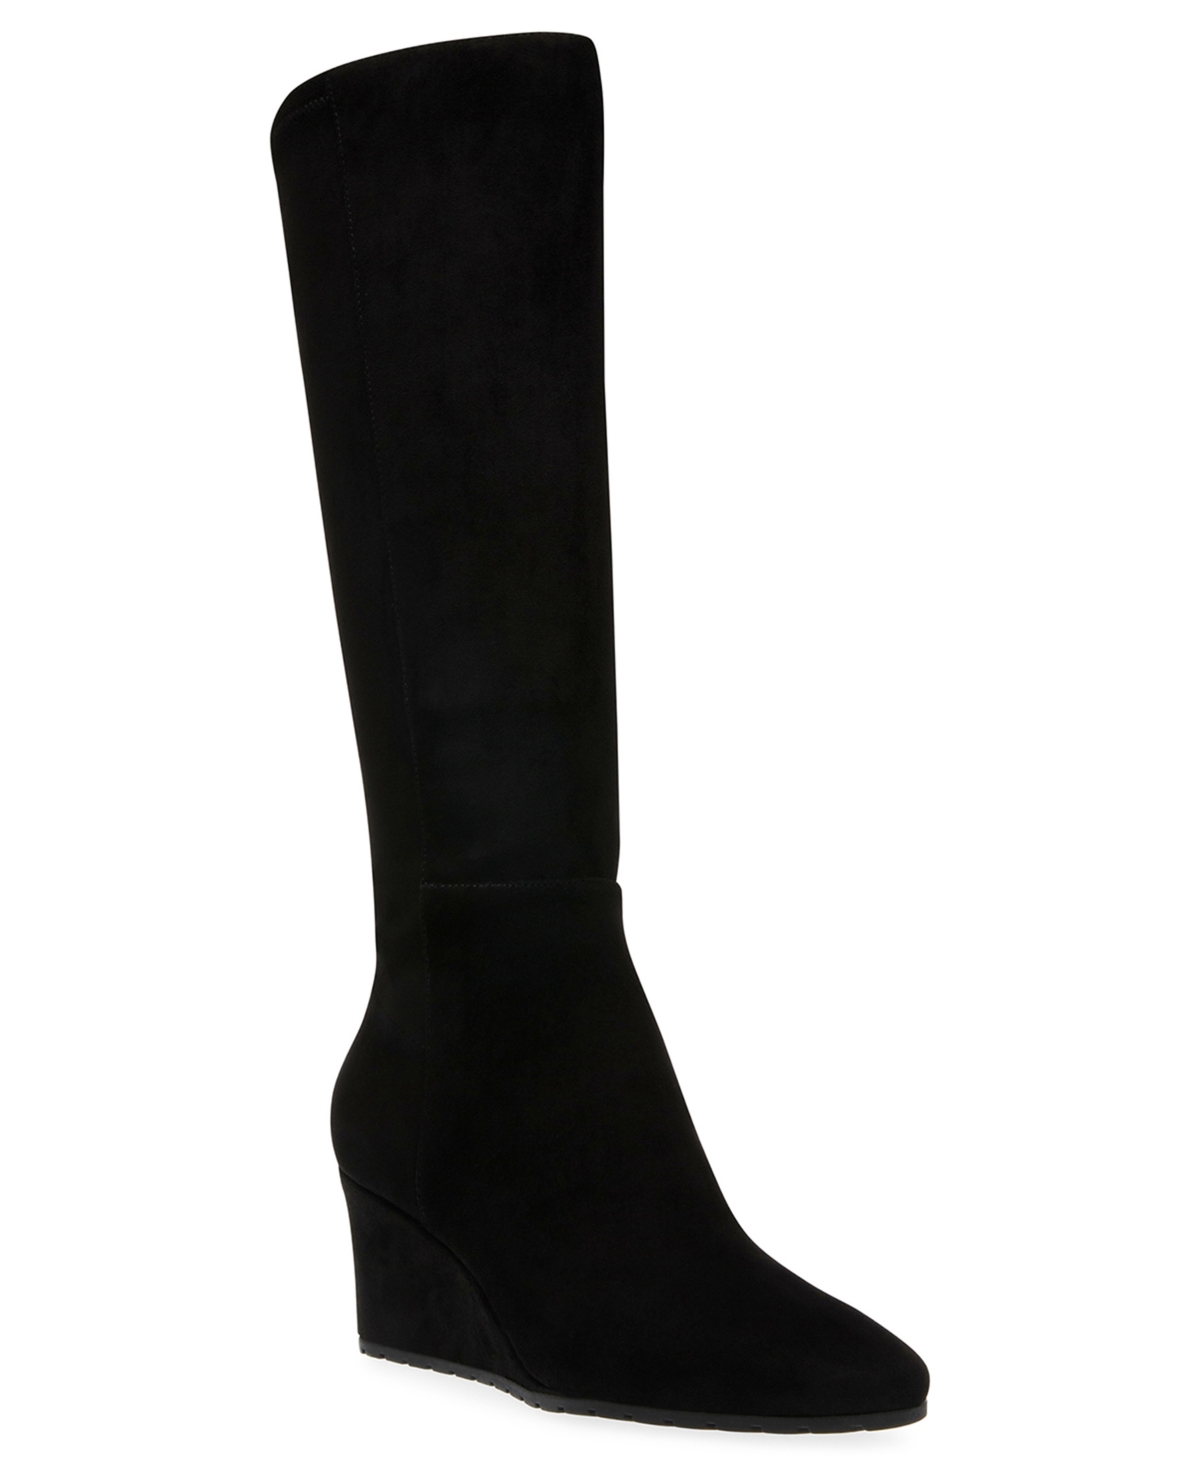 Women's Valonia Wedge Heel Knee High Boots - Black Ms